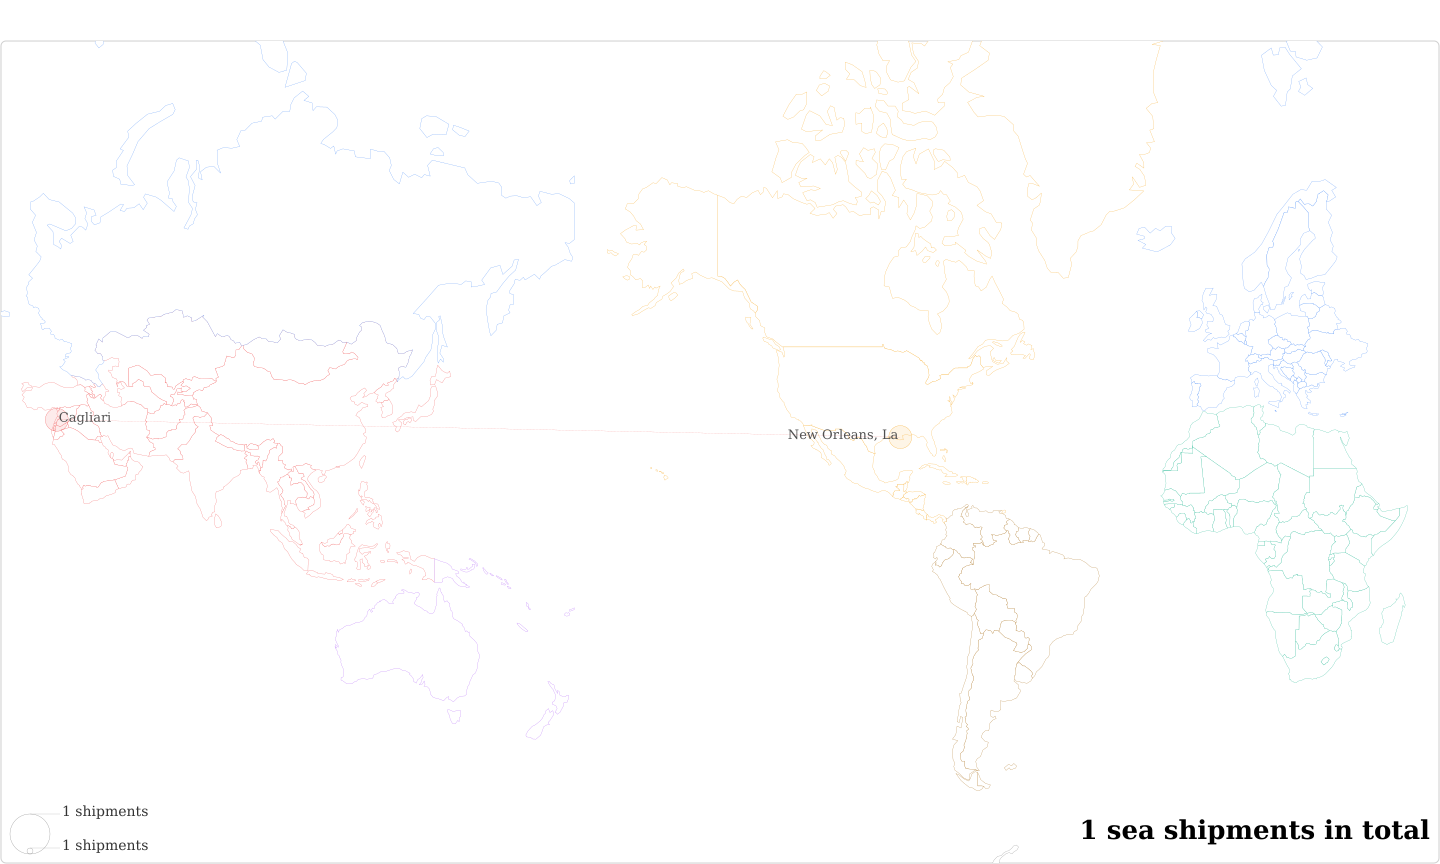 Supermercado Sin Fronteras's Imports Per Country Map